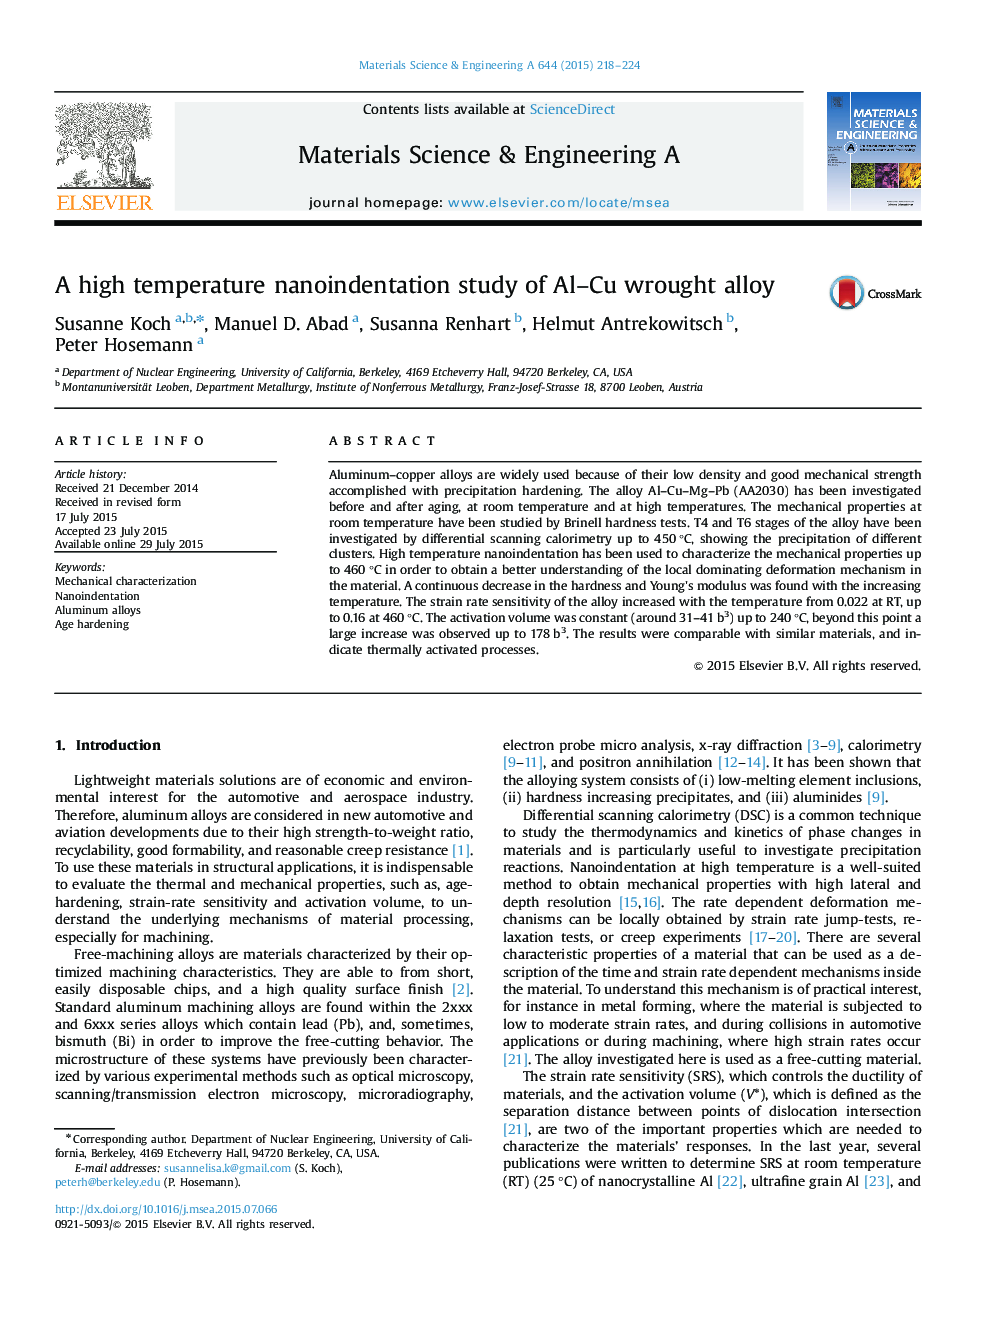 A high temperature nanoindentation study of Al-Cu wrought alloy